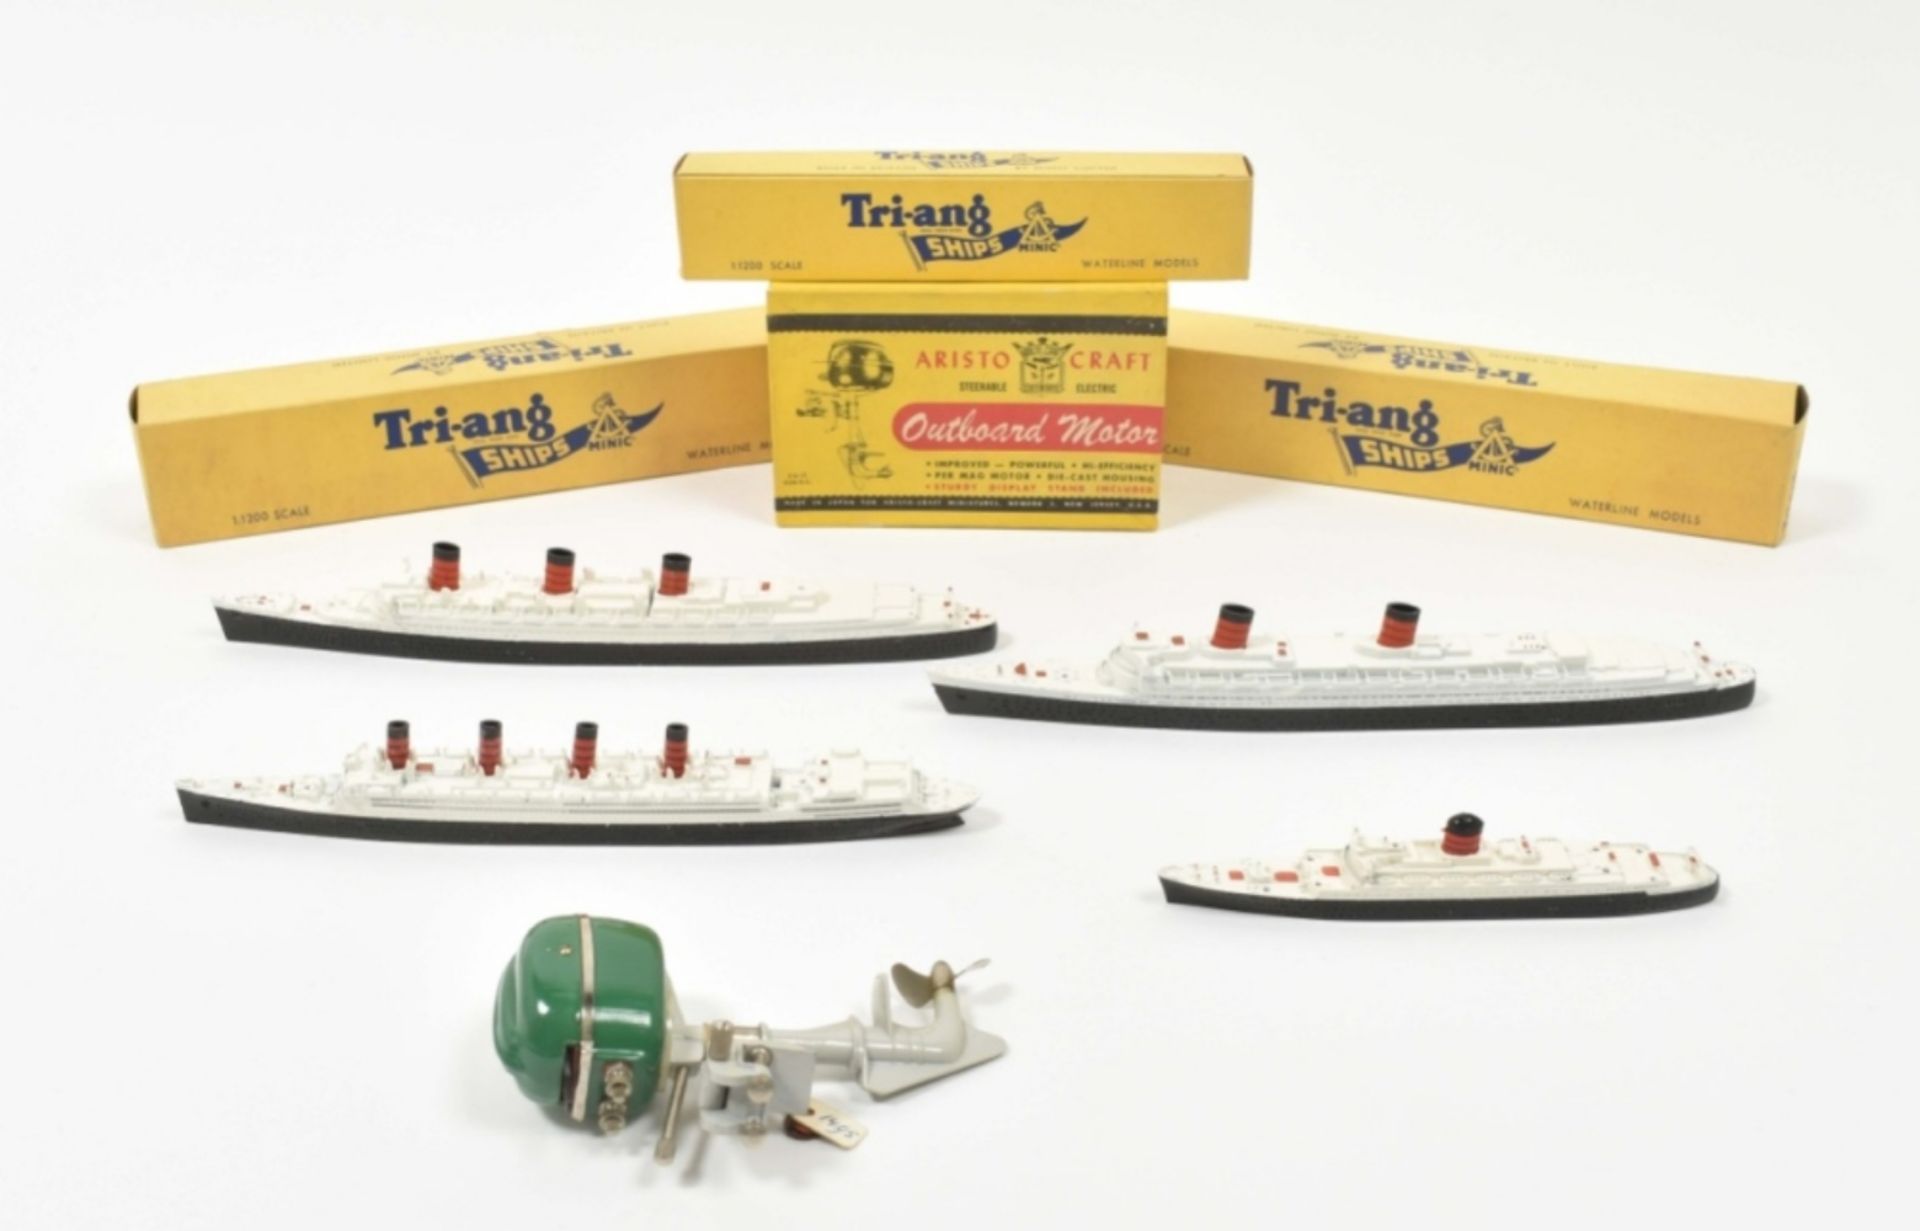 Tri-ang Ships. Collection of 4